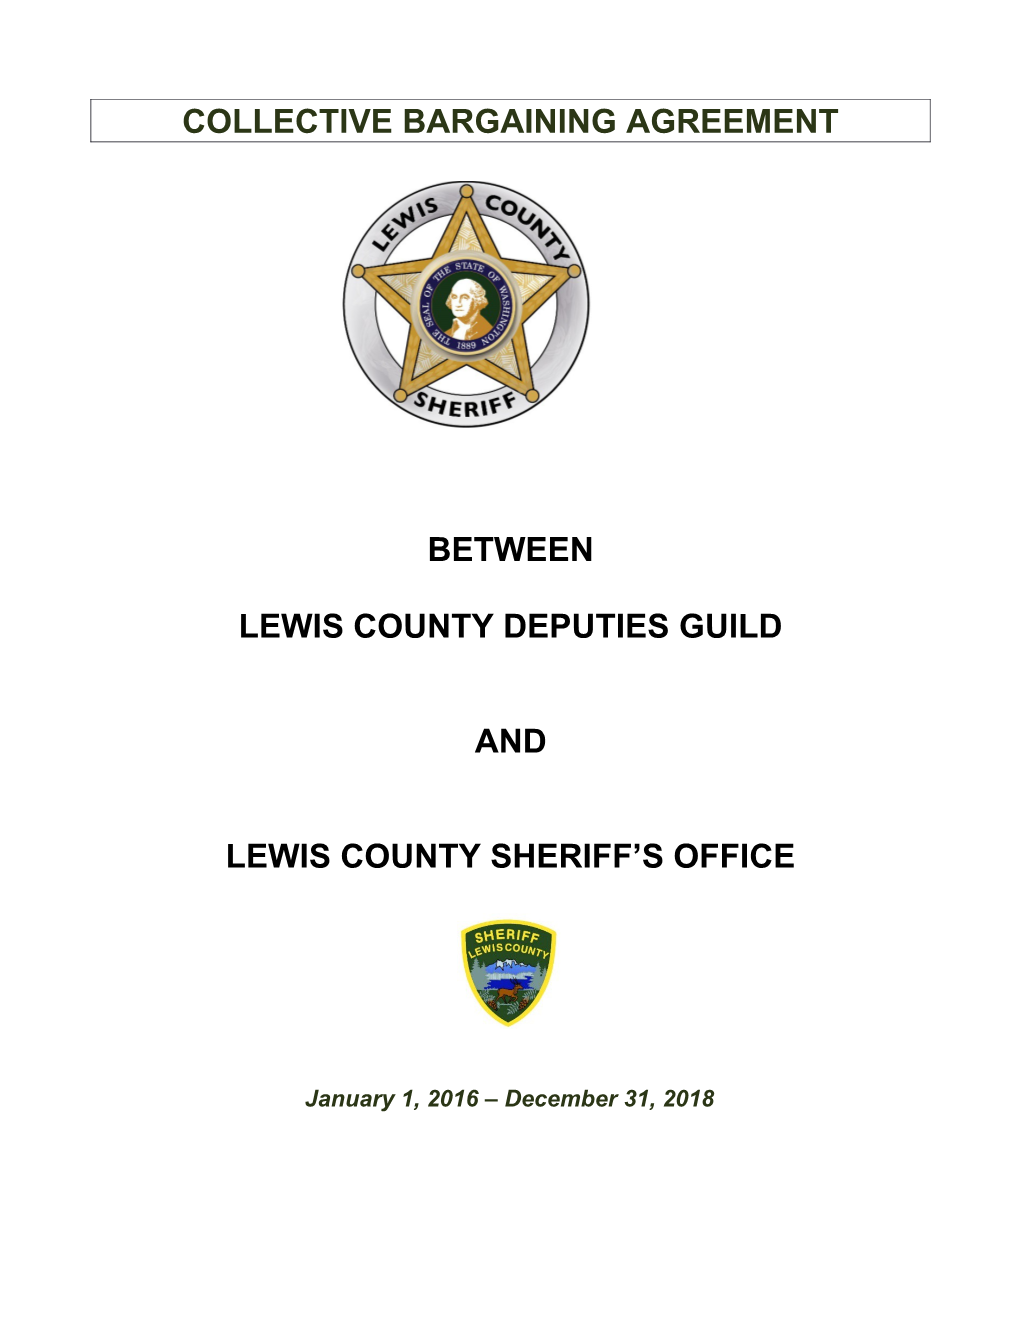 Lewis County Deputies Guild